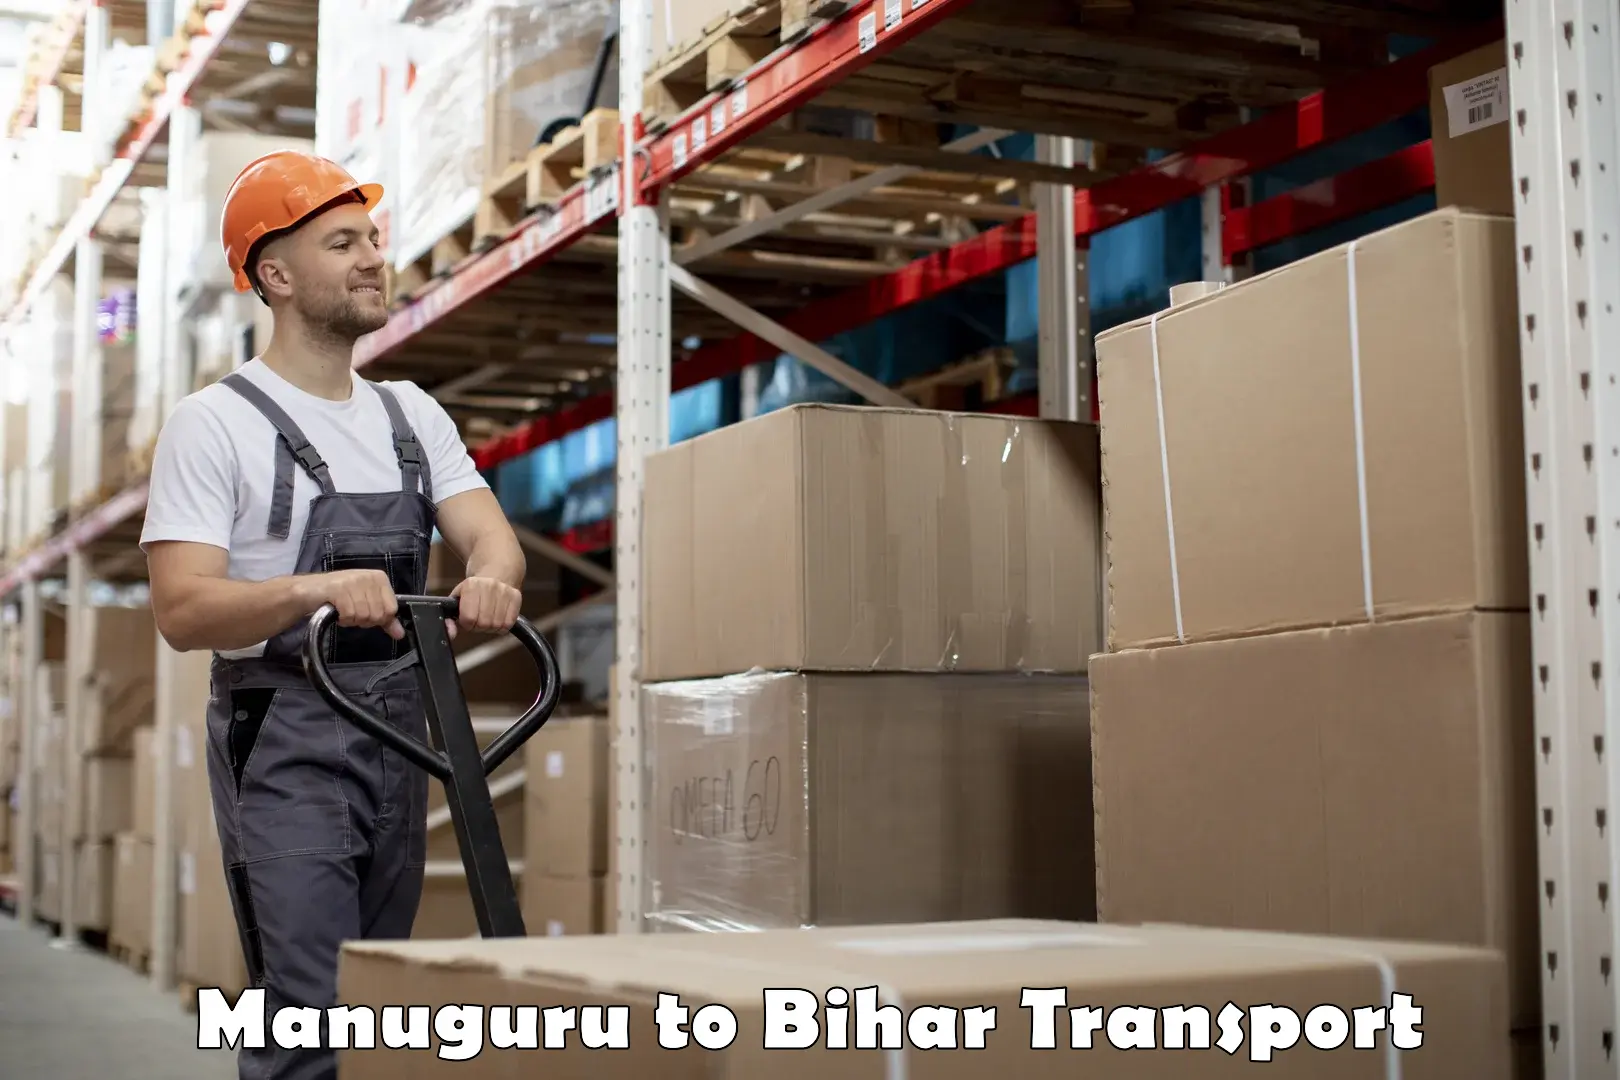 Bike transport service Manuguru to Bihar